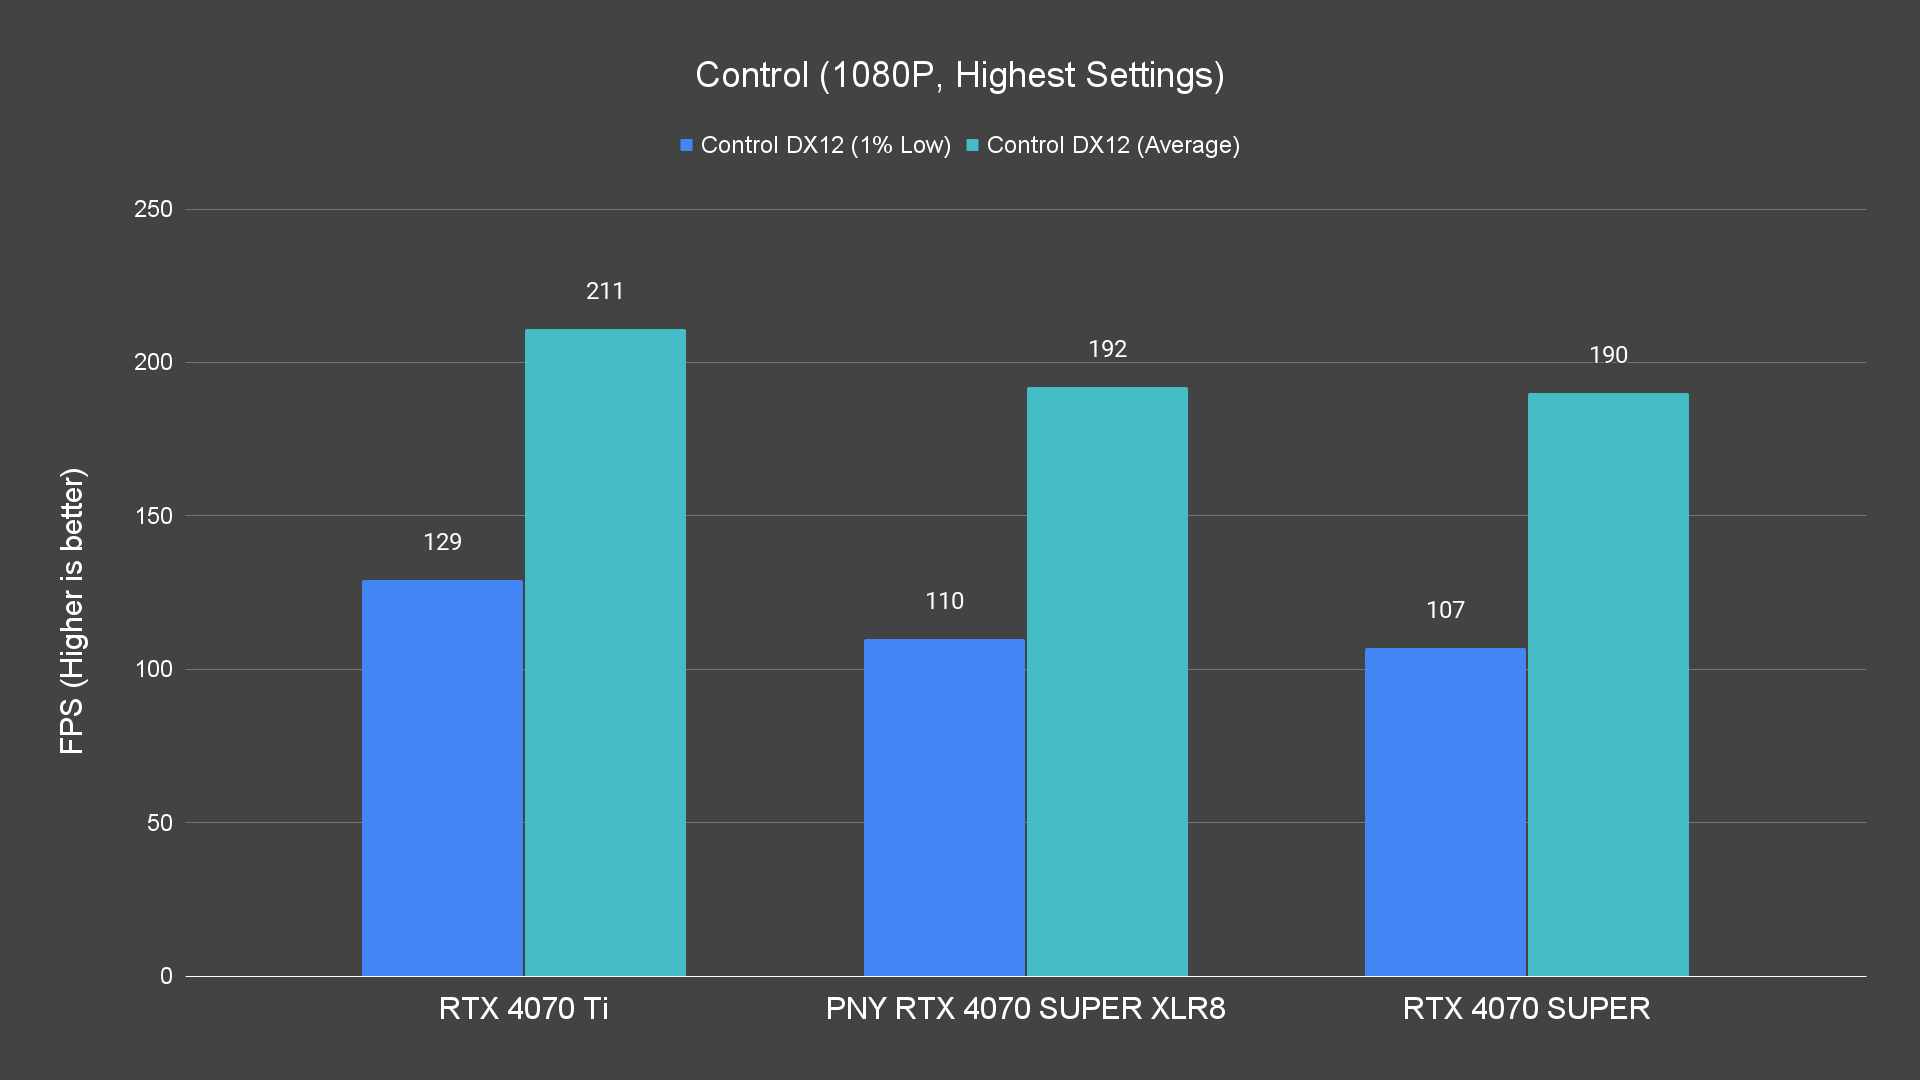 Control (1080P, Highest Settings) Raster PNY RTX 4070 SUPER XLR8